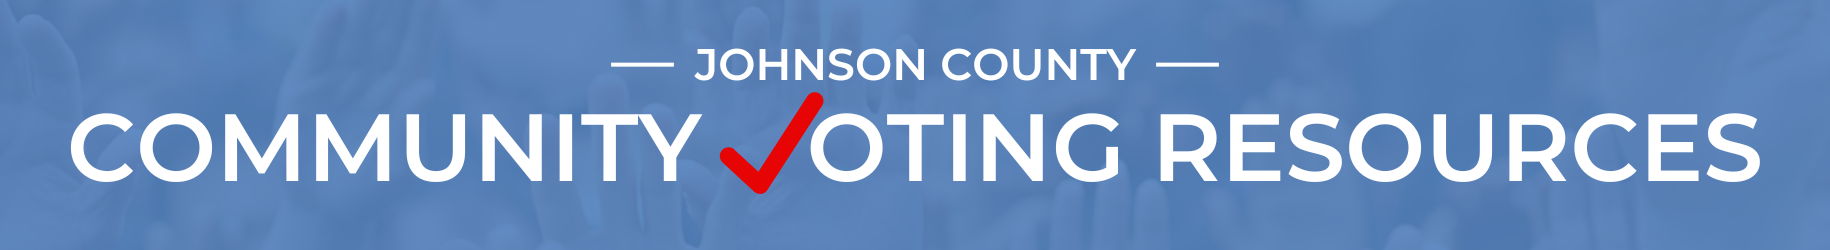 Voting Resources